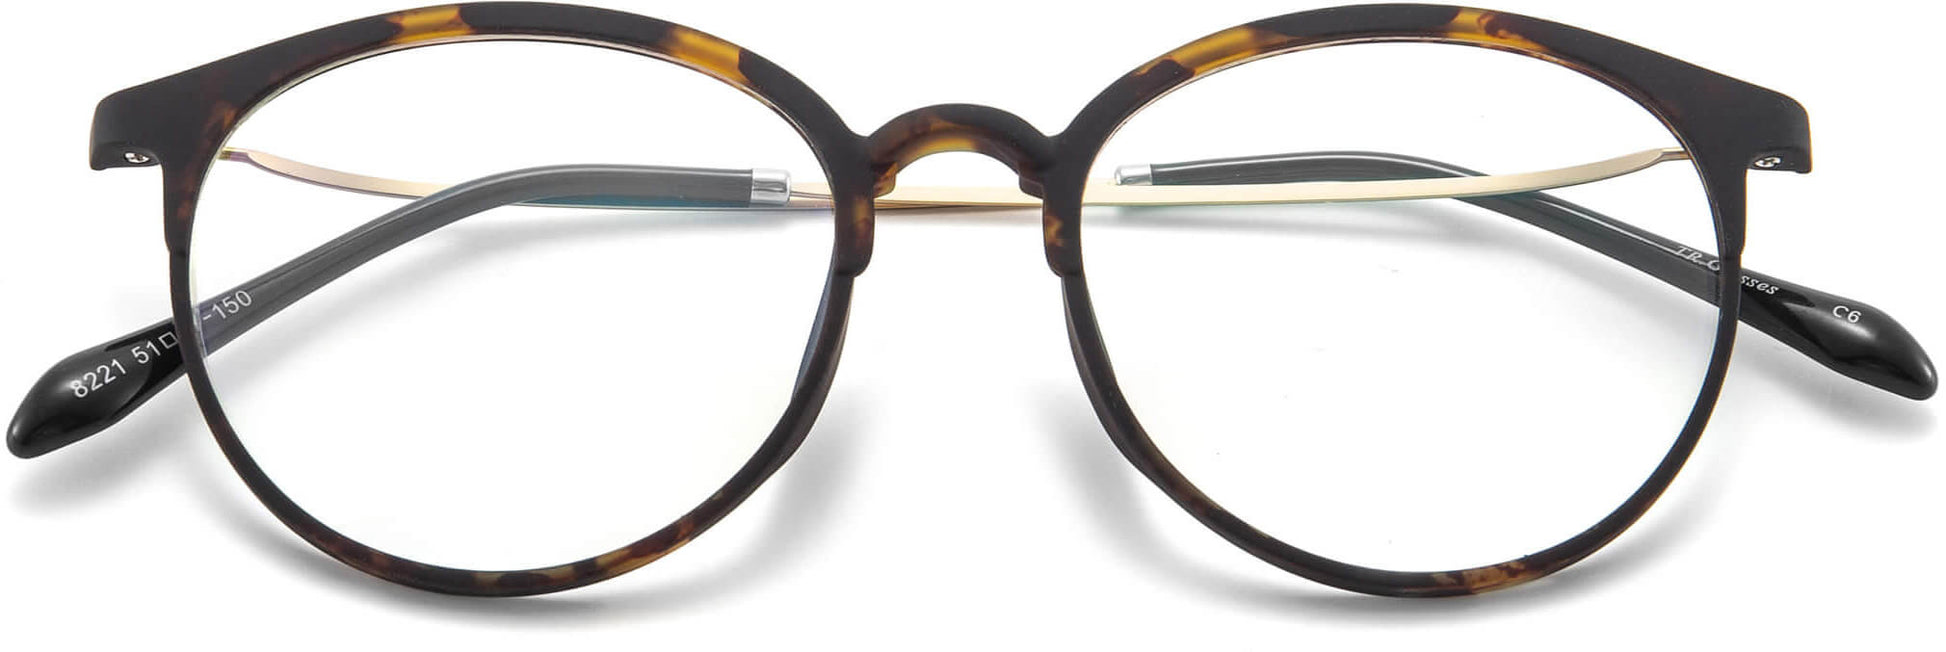 Tene Tortoise Metal  Eyeglasses from ANRRI, Closed View